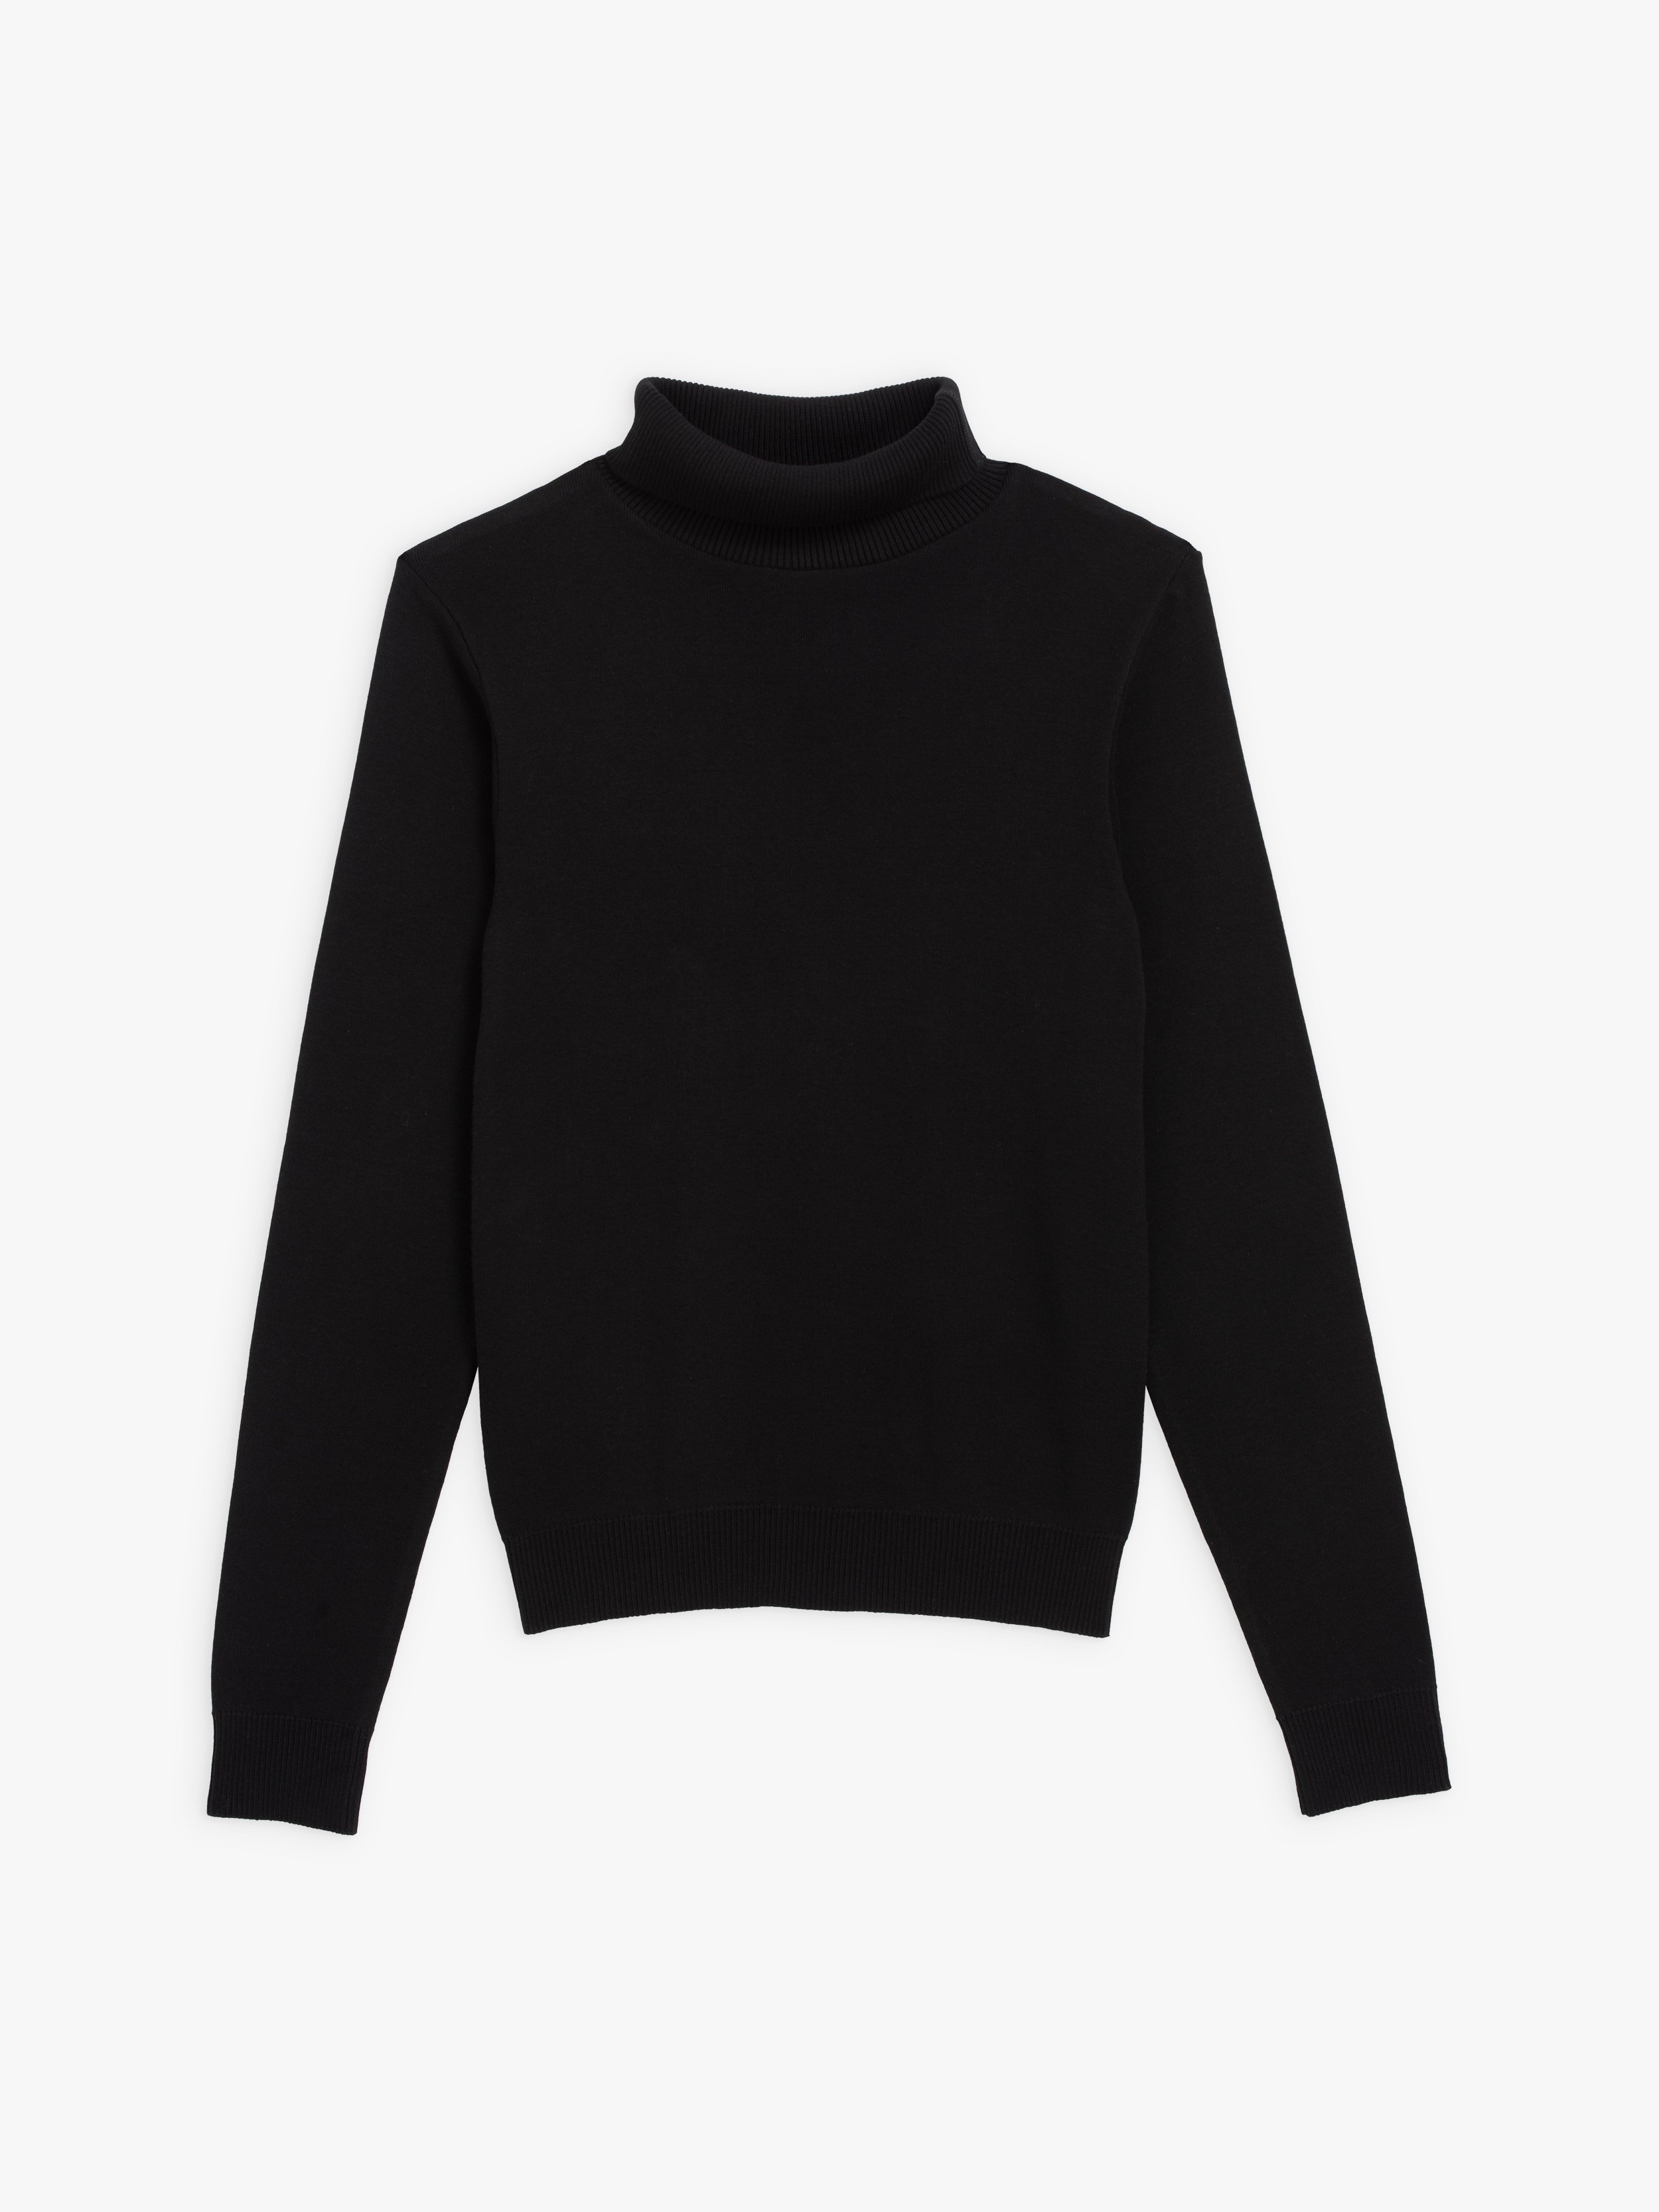 black turtleneck Eddy sweater